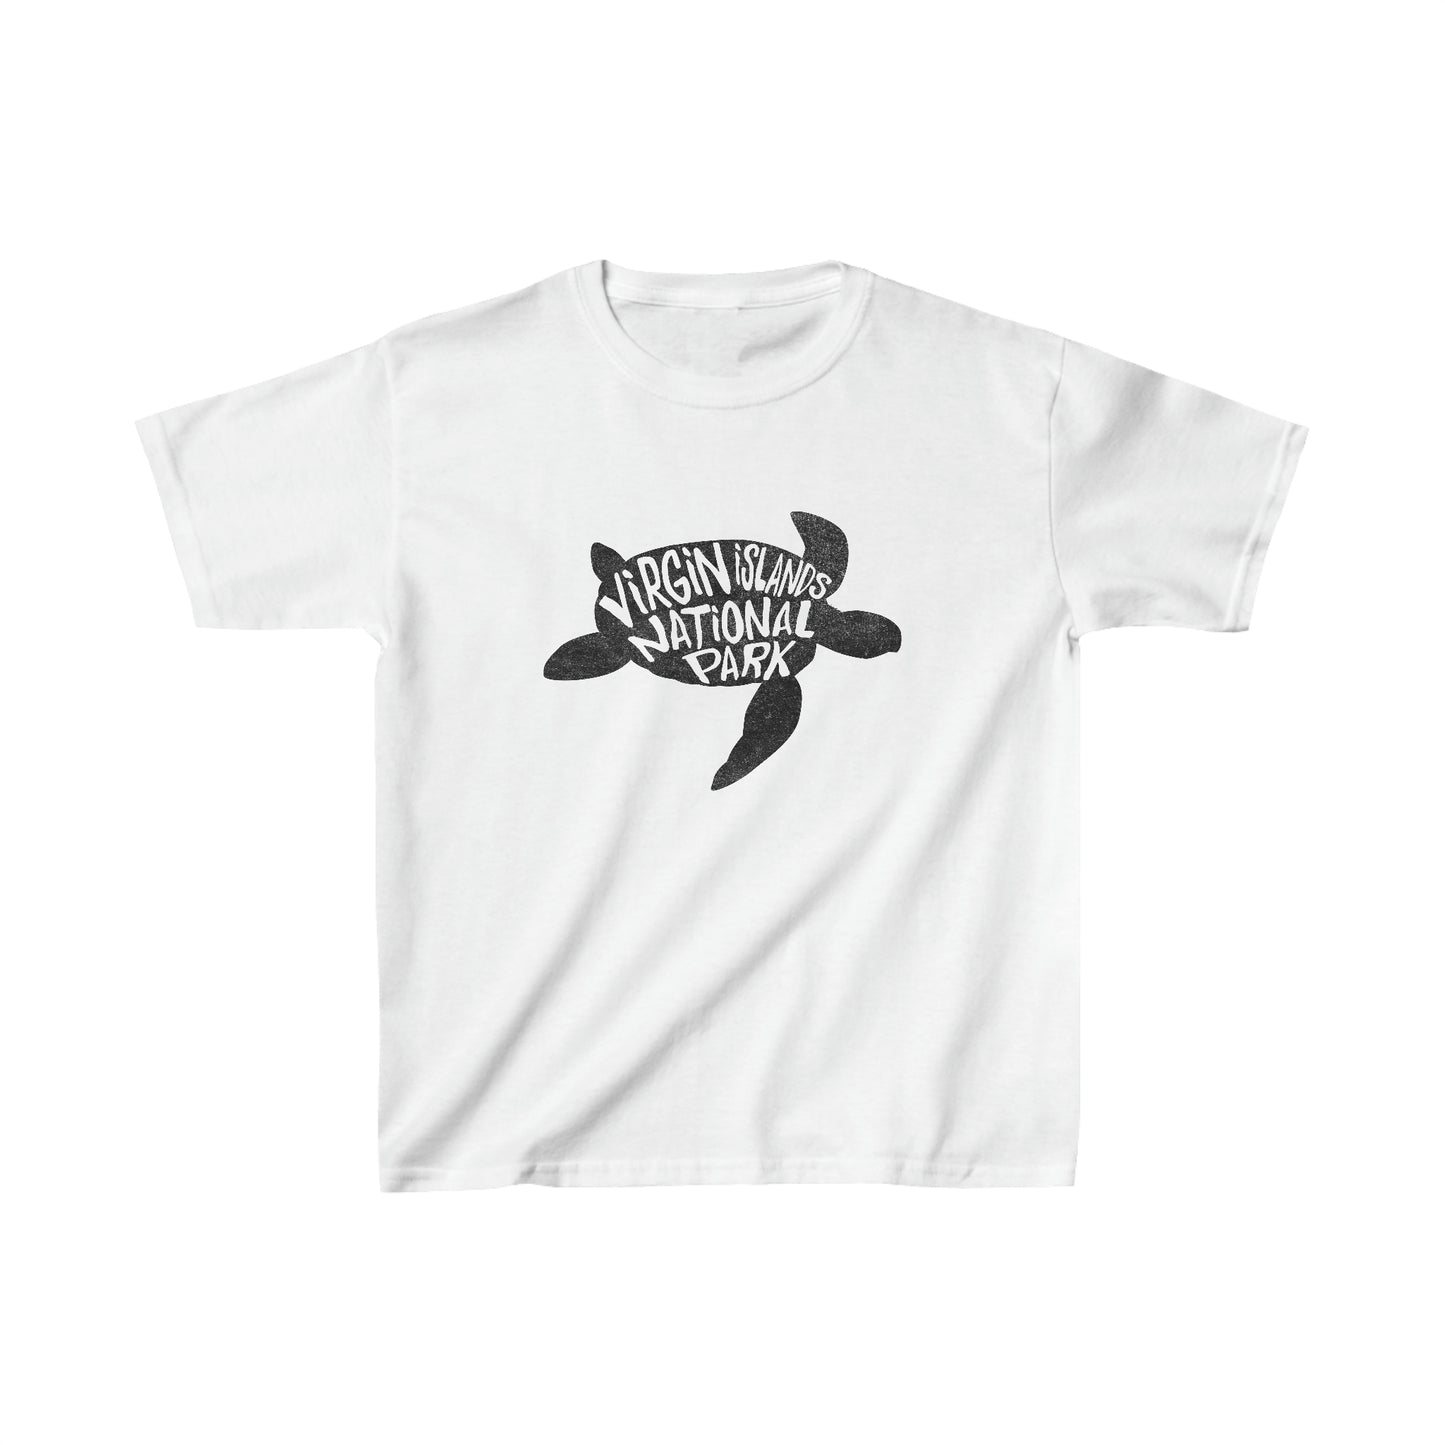 Virgin Islands National Park Child T-Shirt - Sea Turtle Chunky Text